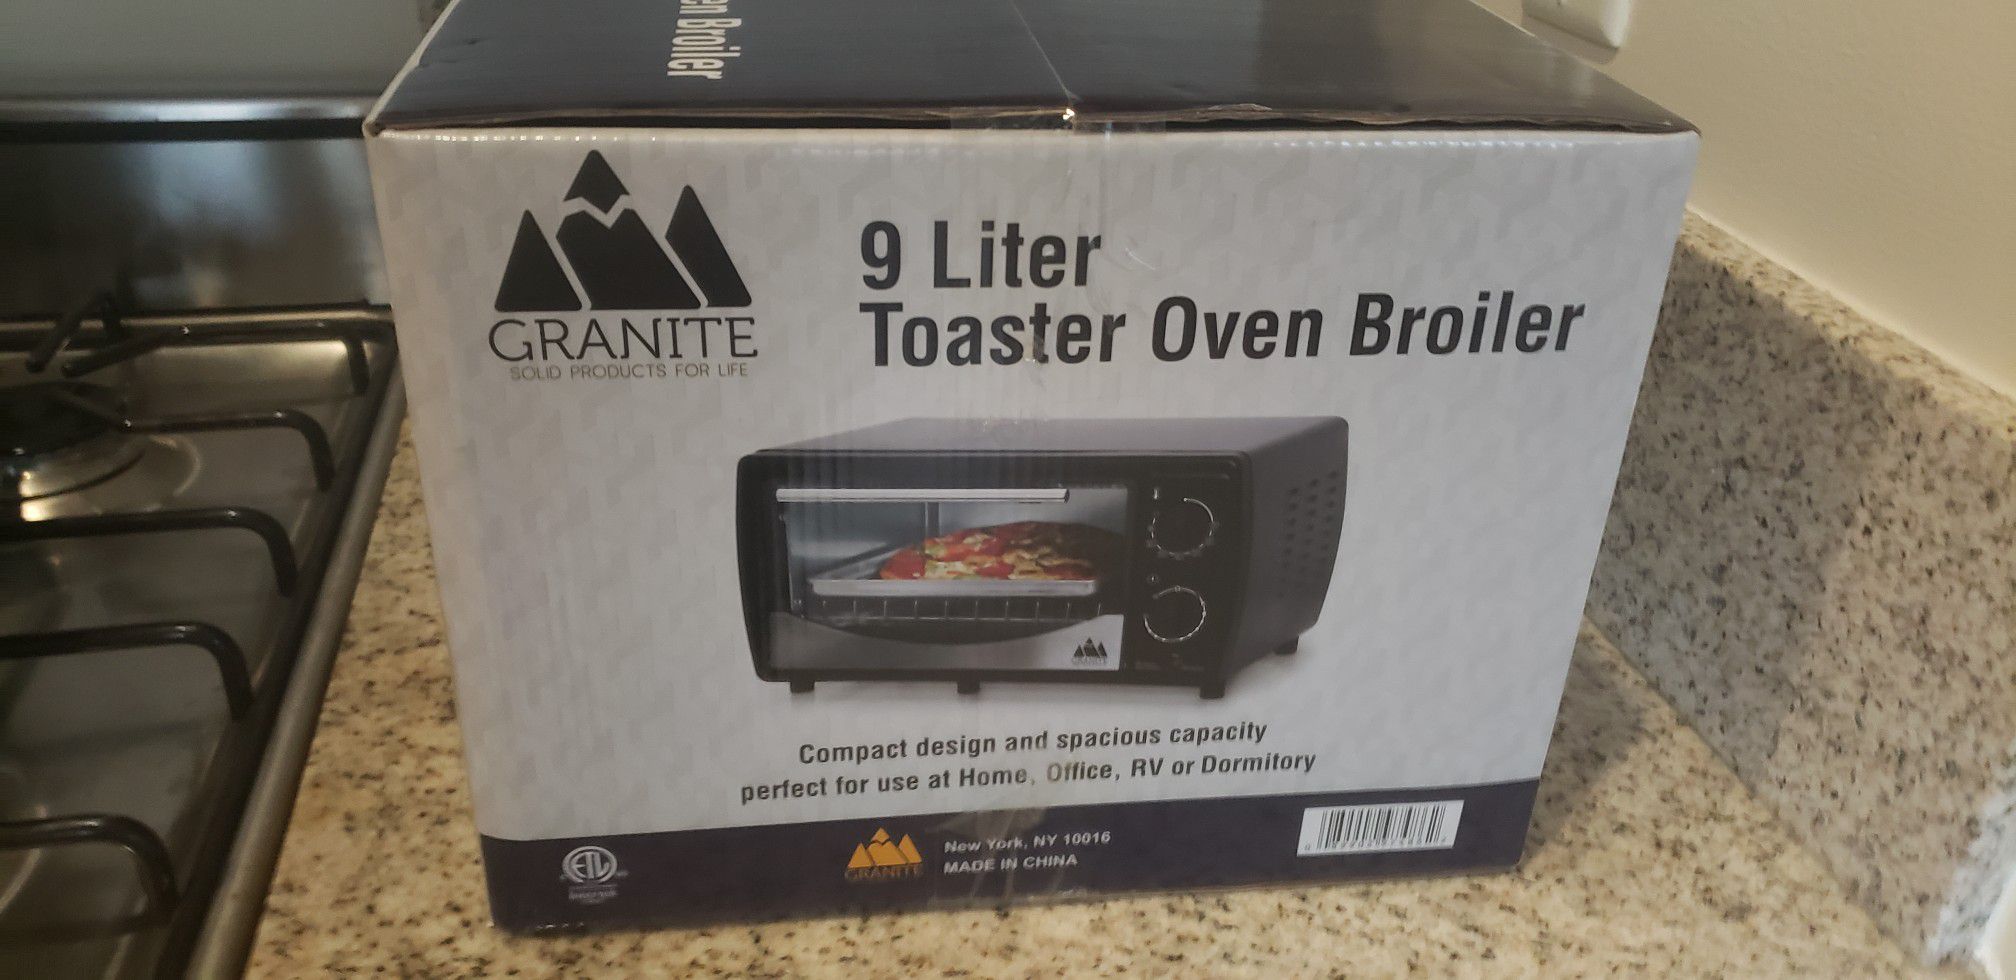 9 Liter Toaster Oven Broiler